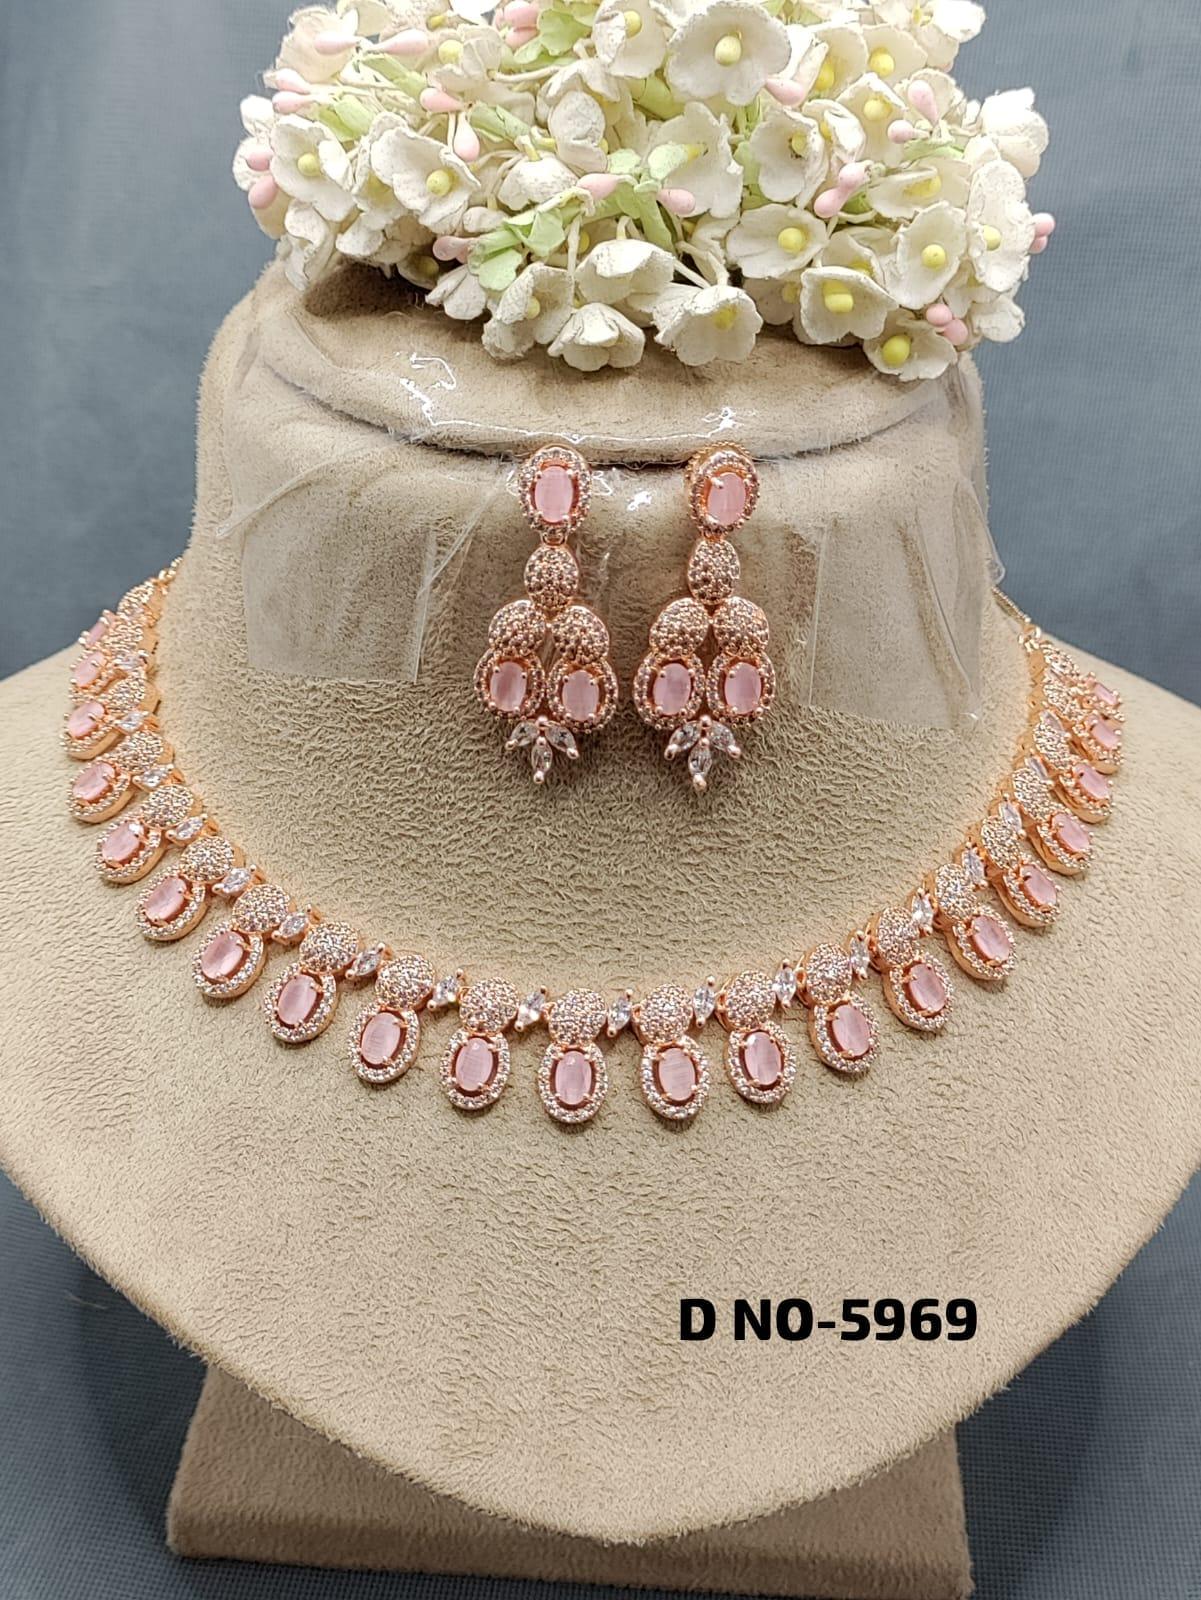 American Diamond Necklace Rosegold Sku 5969 C3 - rchiecreation